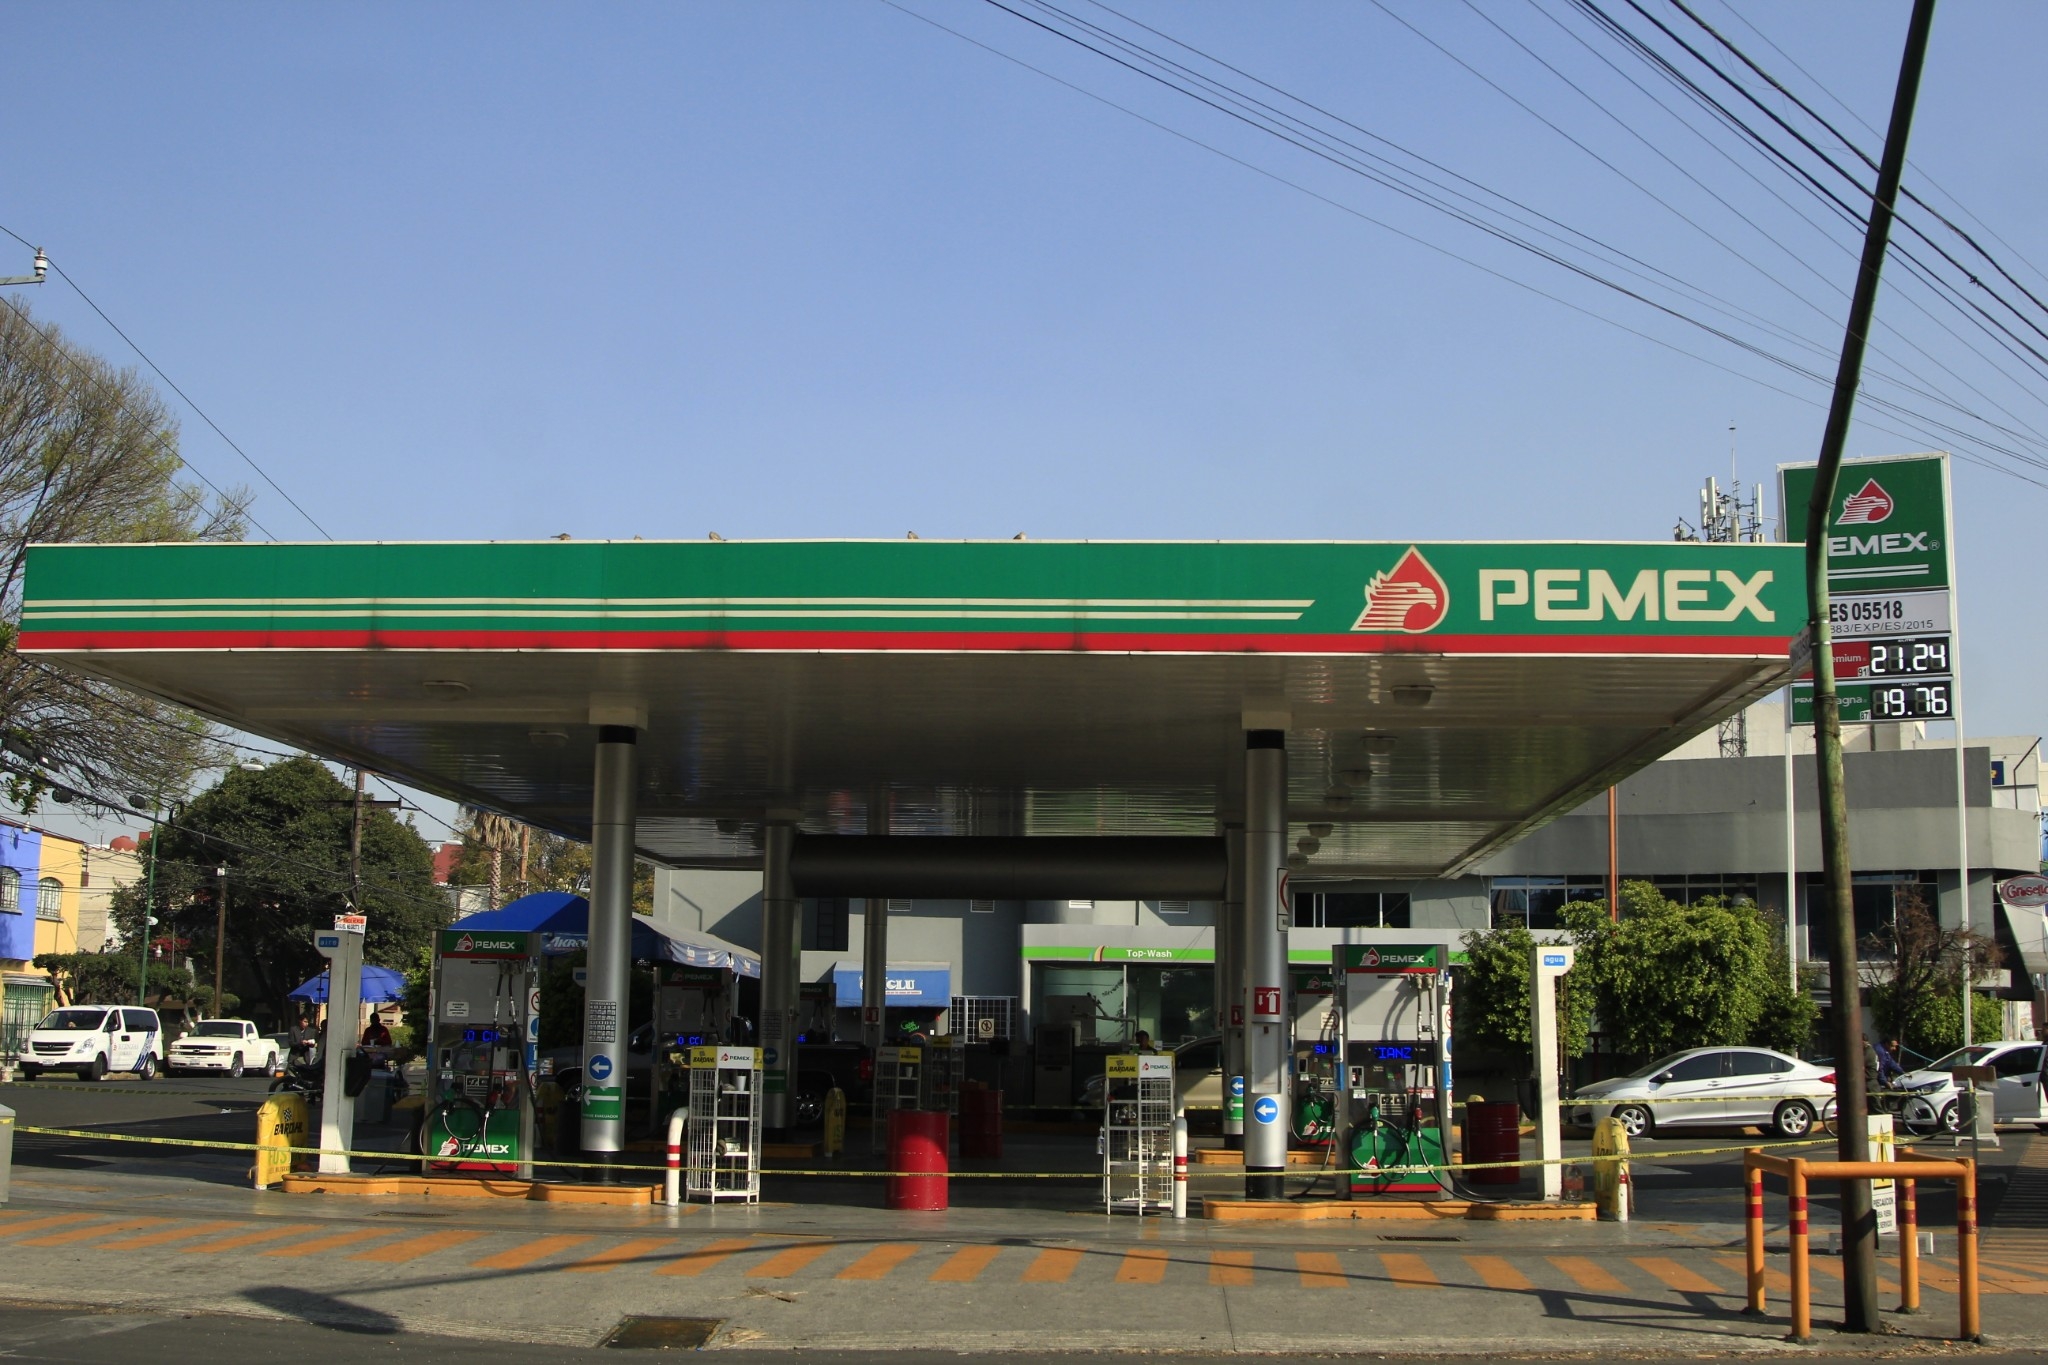 Buscan quitar concesión a gasolineras que se niegan a ser verificadas